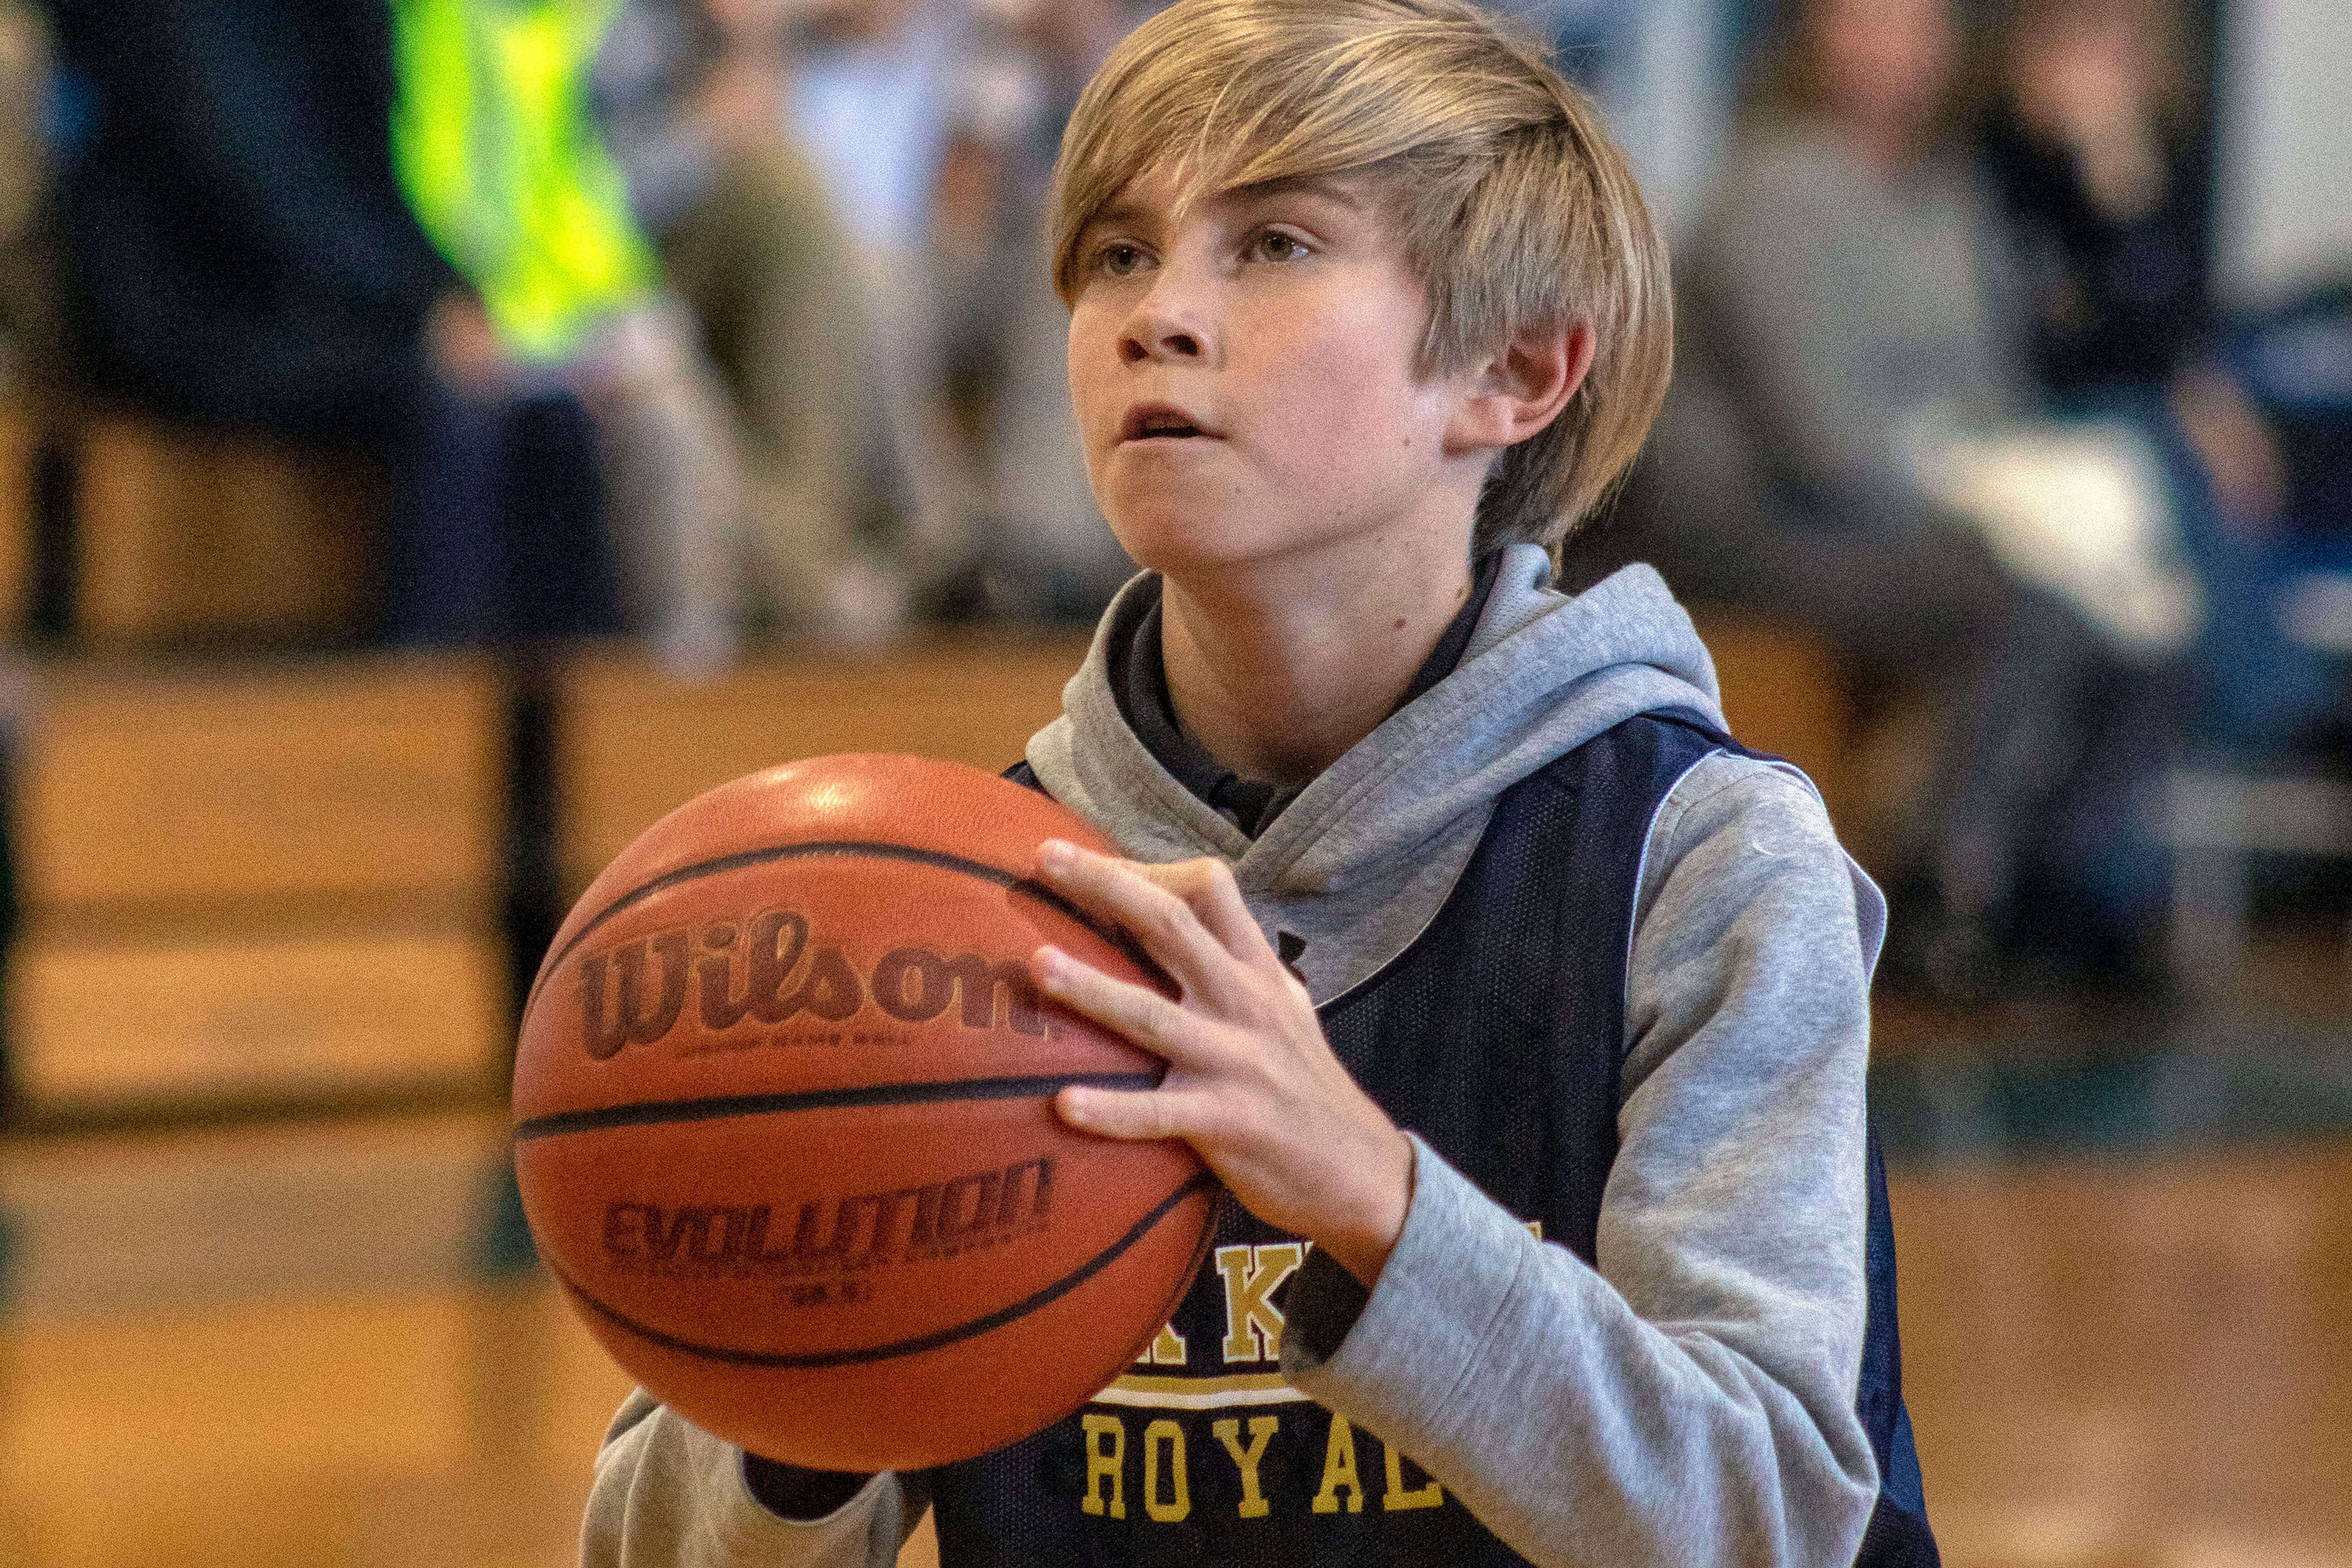 Lower School boy preparing to take a shot during an Oak Knoll basketball game